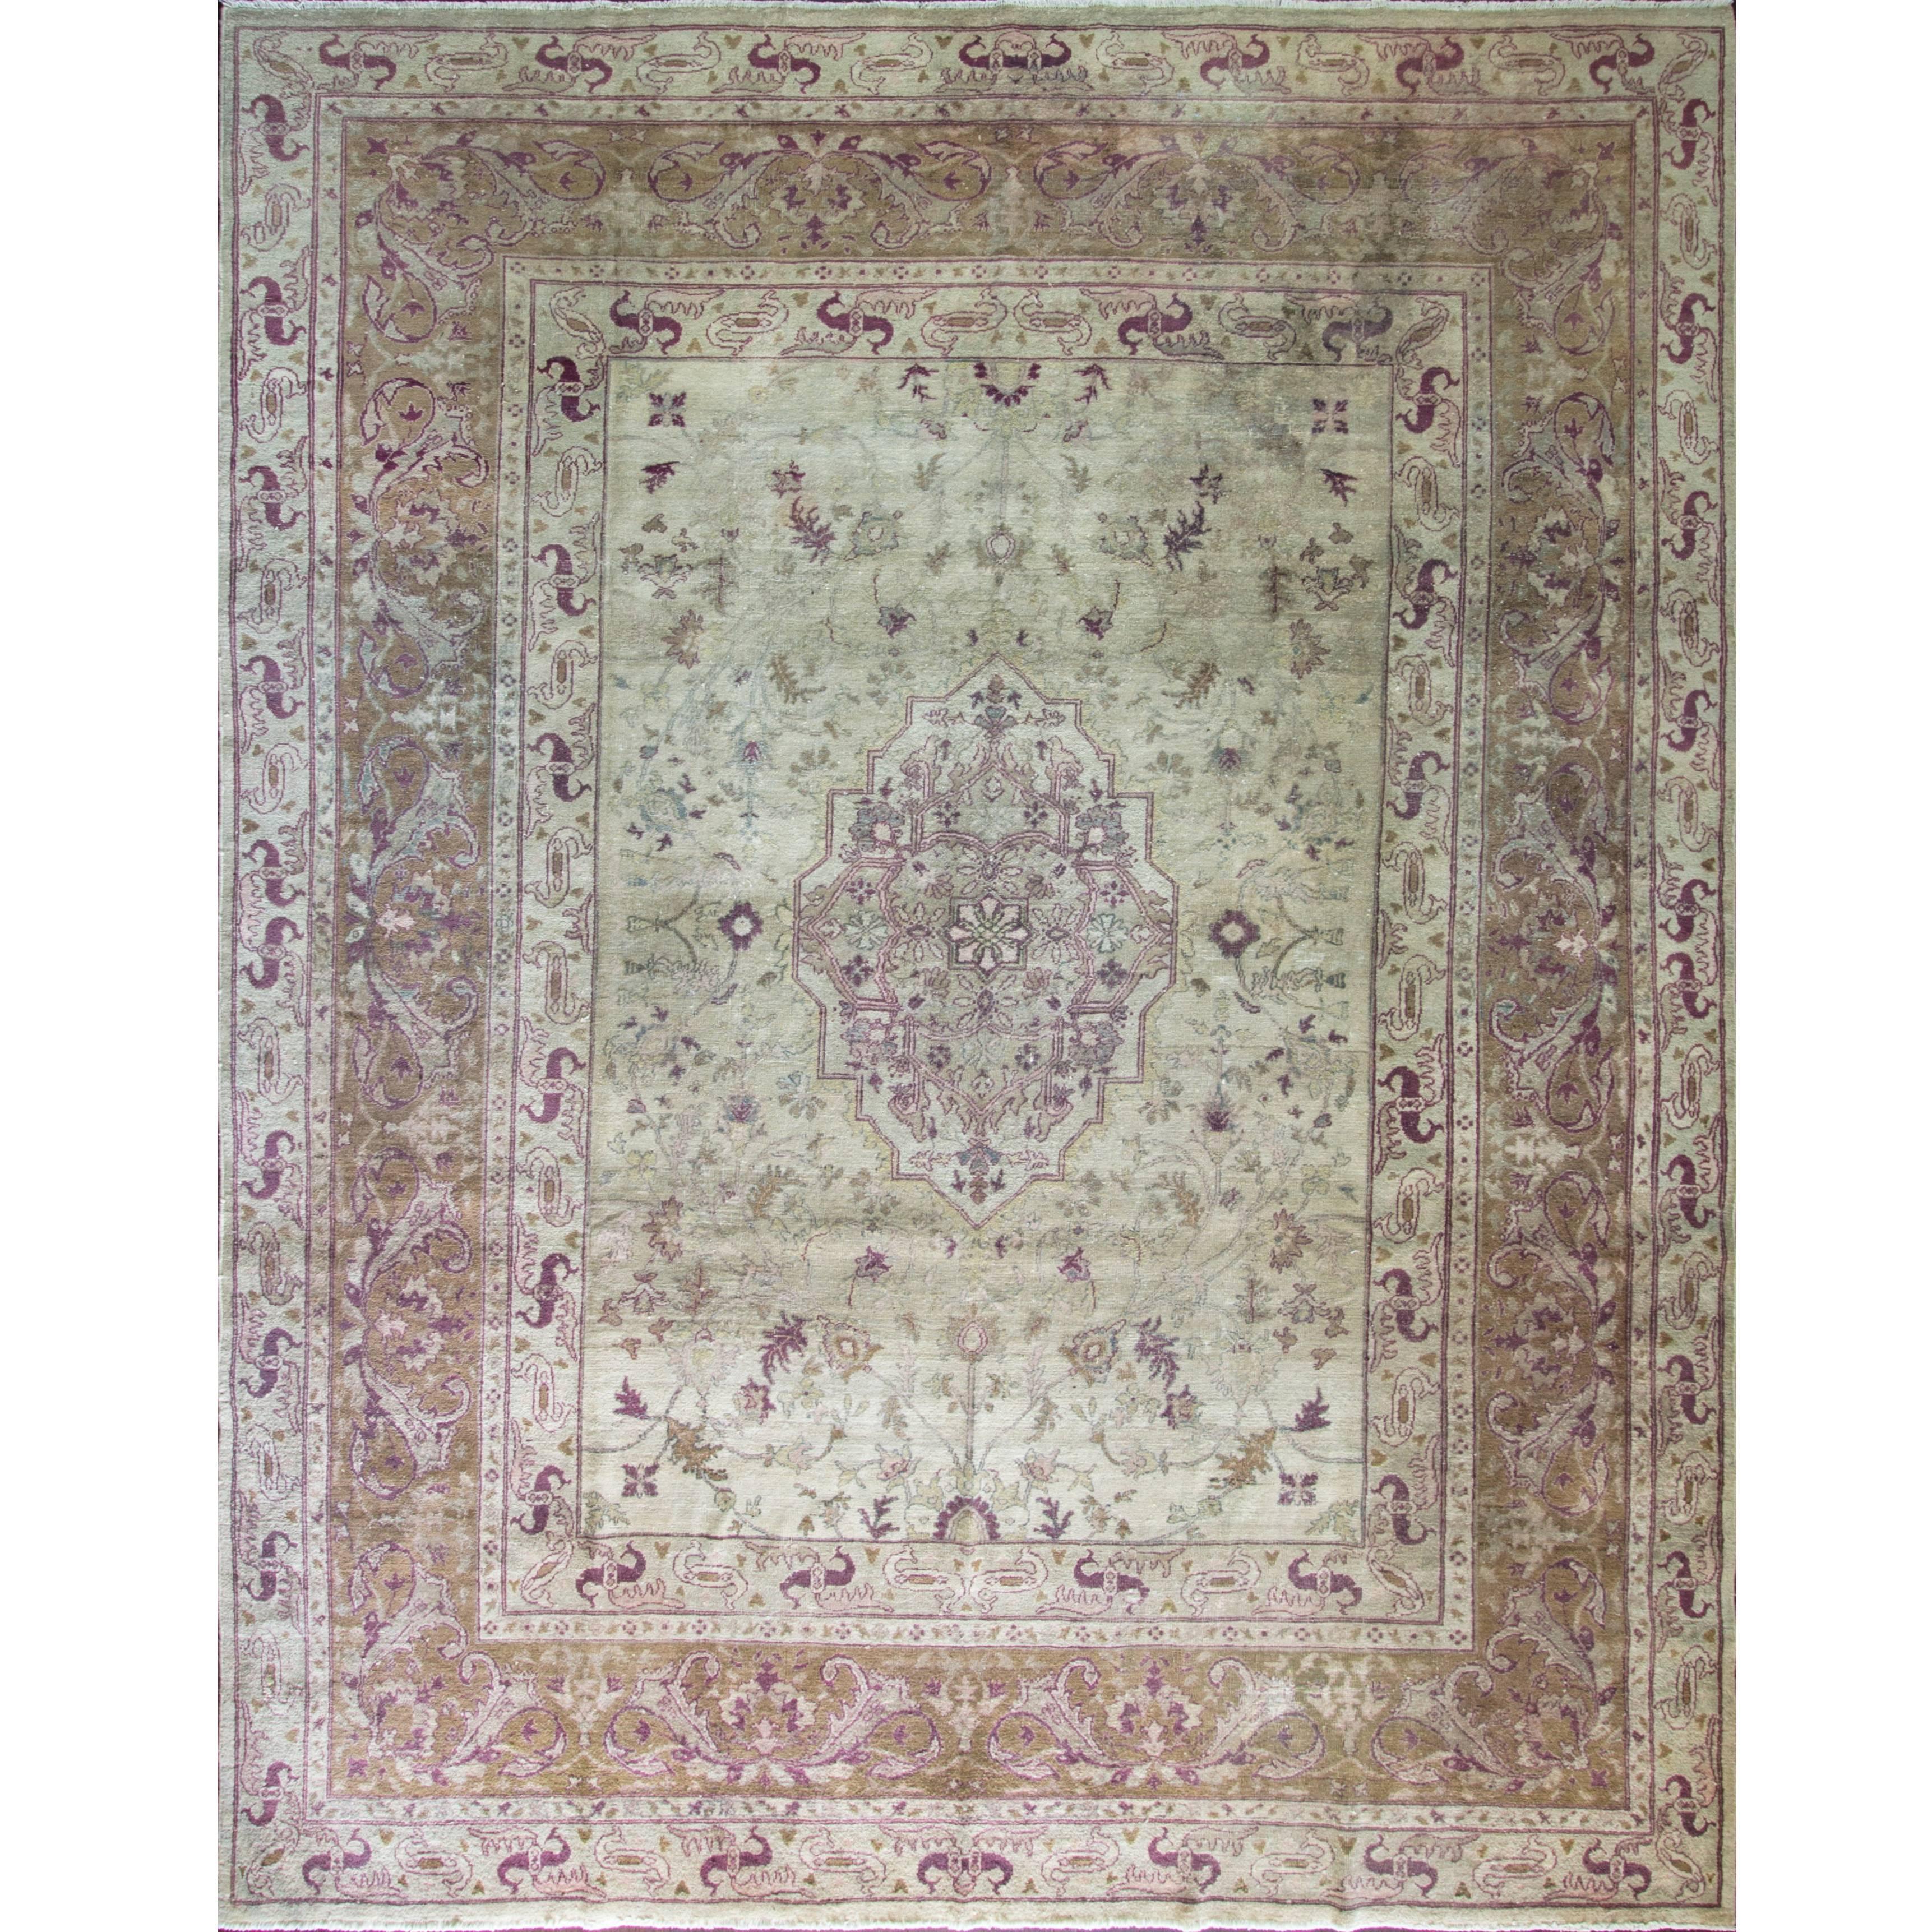 Antique Amritsar/ Agra Carpet, 10' x 13' For Sale